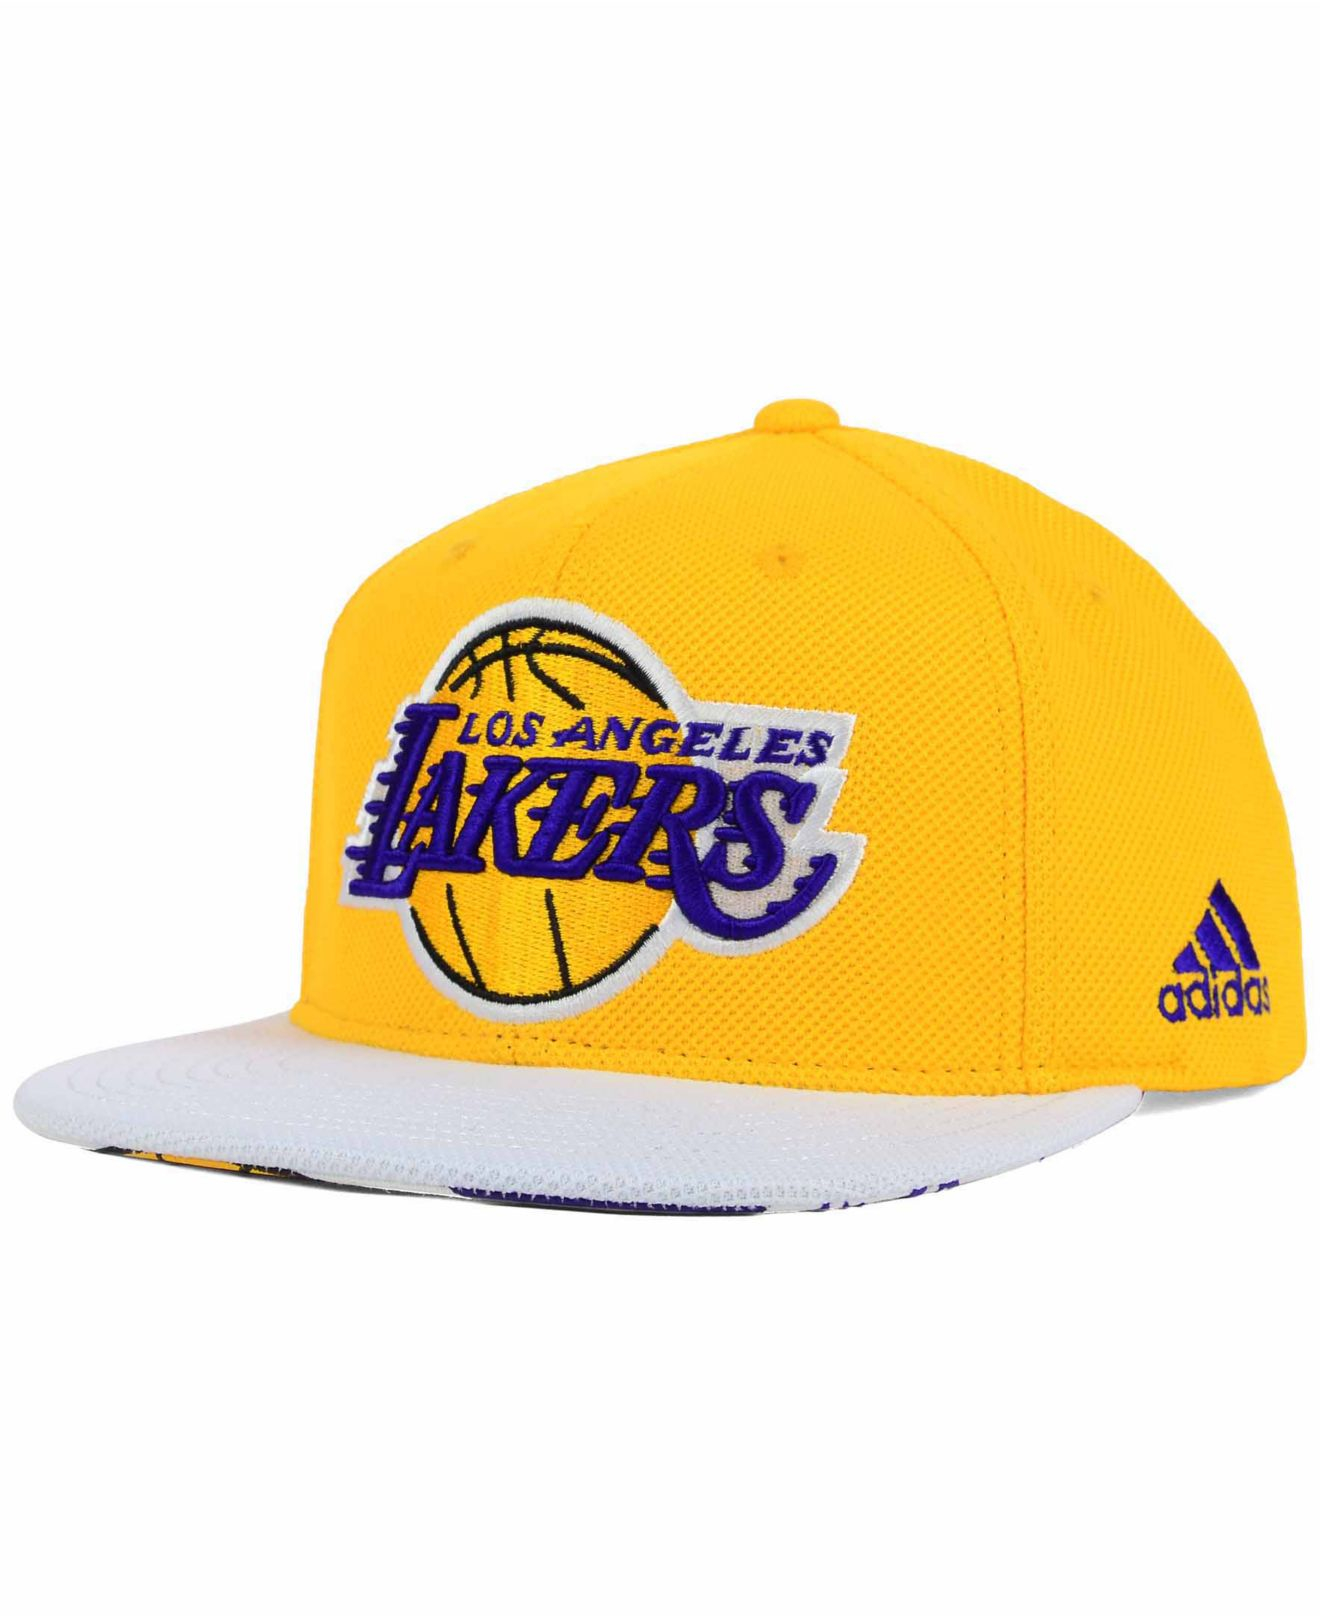 adidas Los Angeles Lakers 2015 Nba Draft Snapback Cap in Yellow for Men